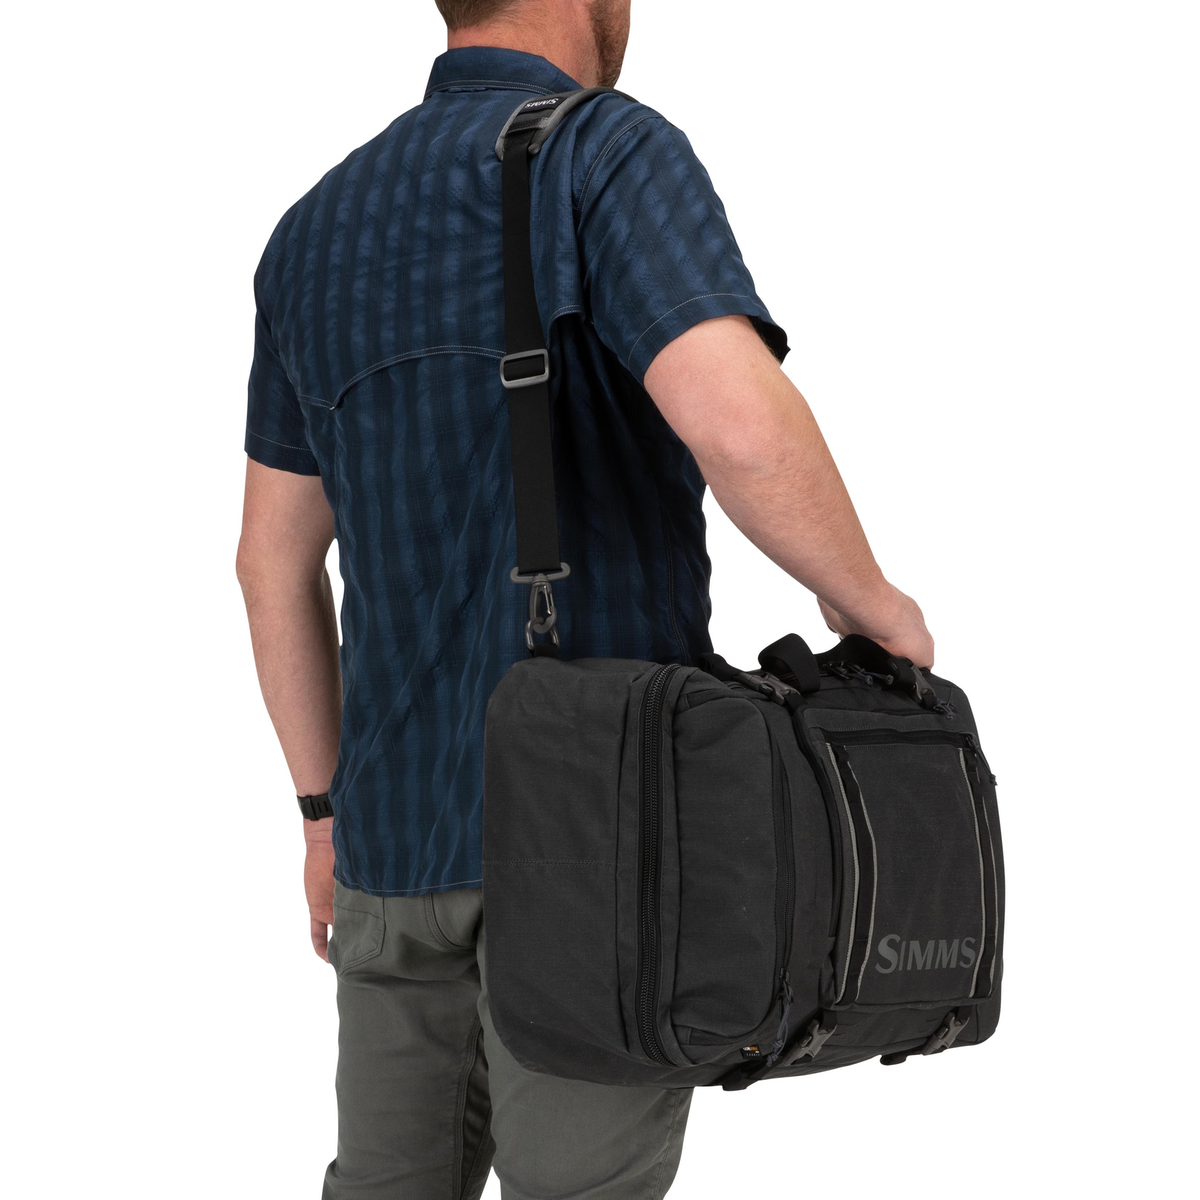 Travel Bag Simms GTS Tri Carry Duffel Carbon